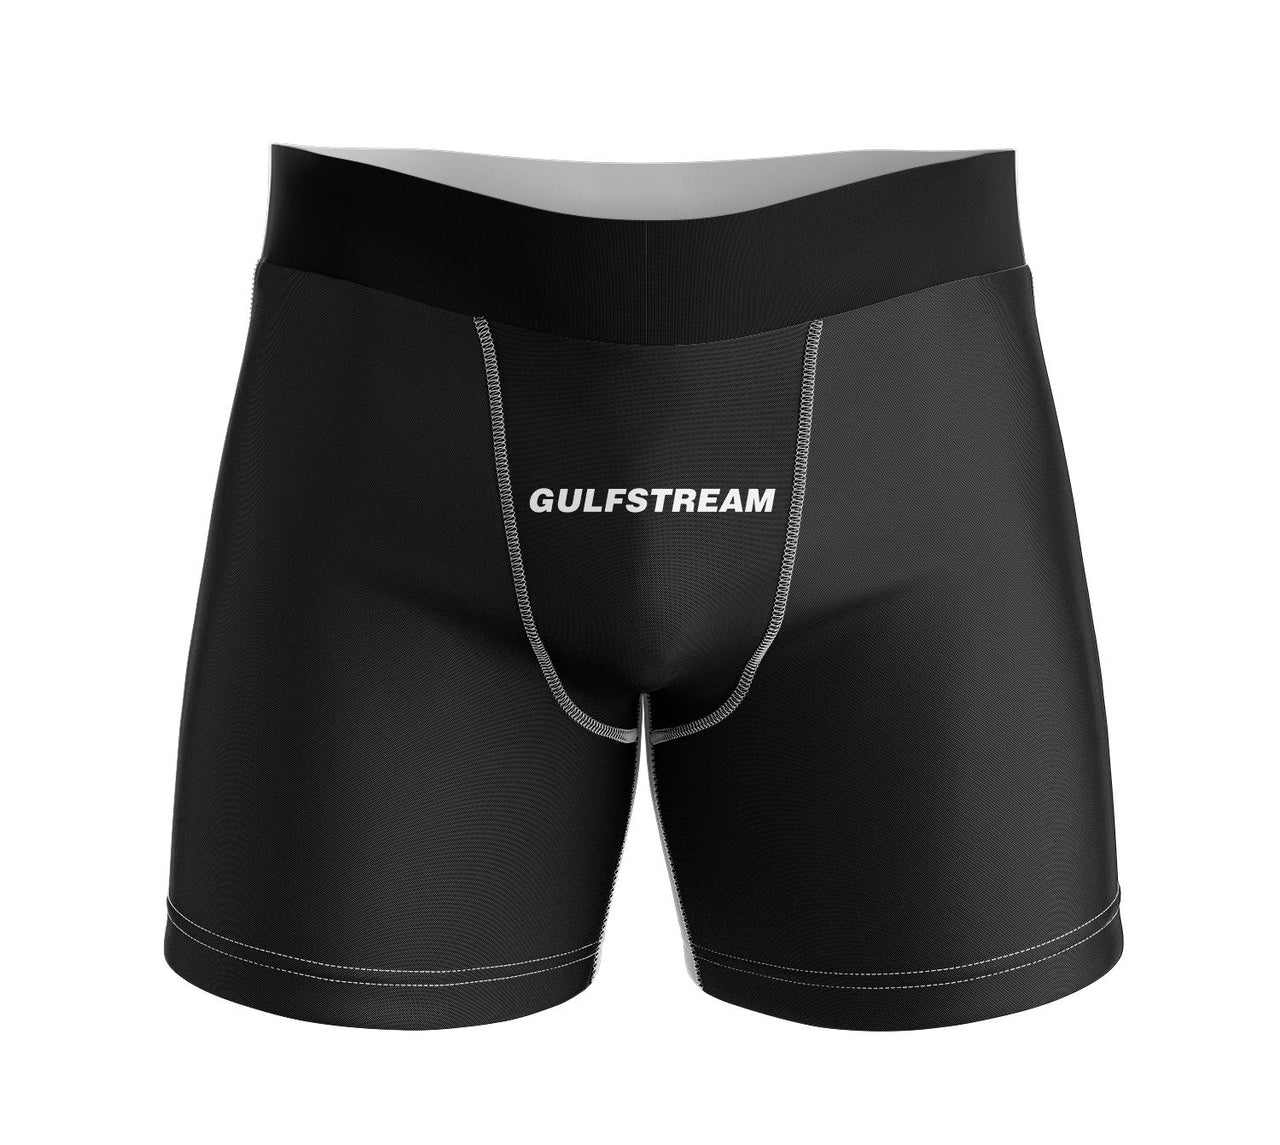 Gulfstream & Text Designed Men Boxers